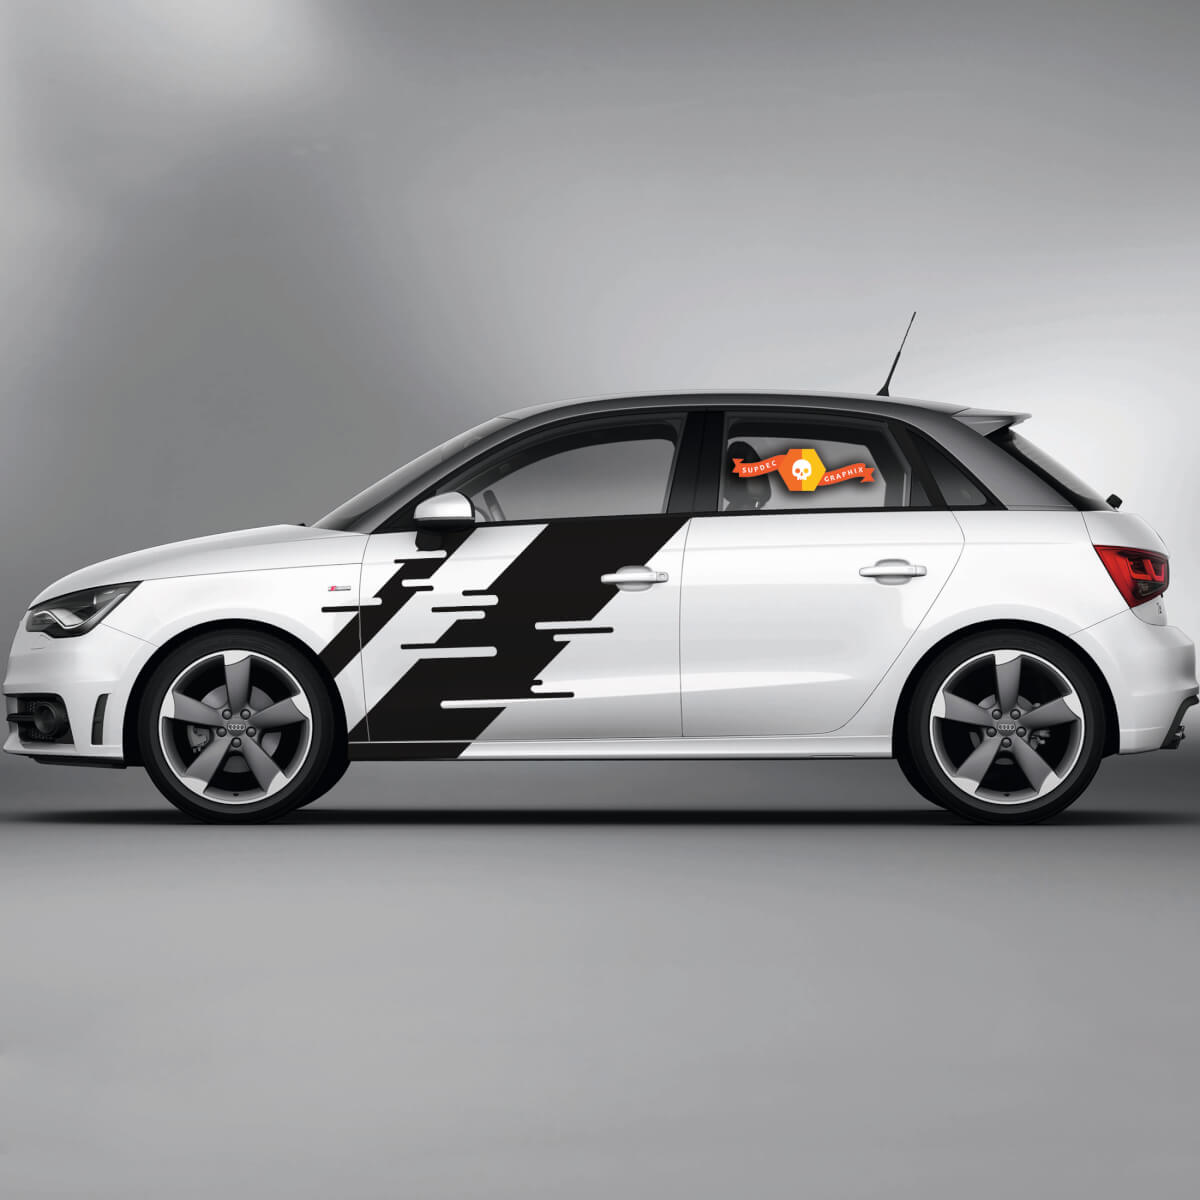 2x Vinyl-Abziehbilder Grafik-Aufkleber Audi A1 Autor Racing Stripes Wide Ribbon 2022